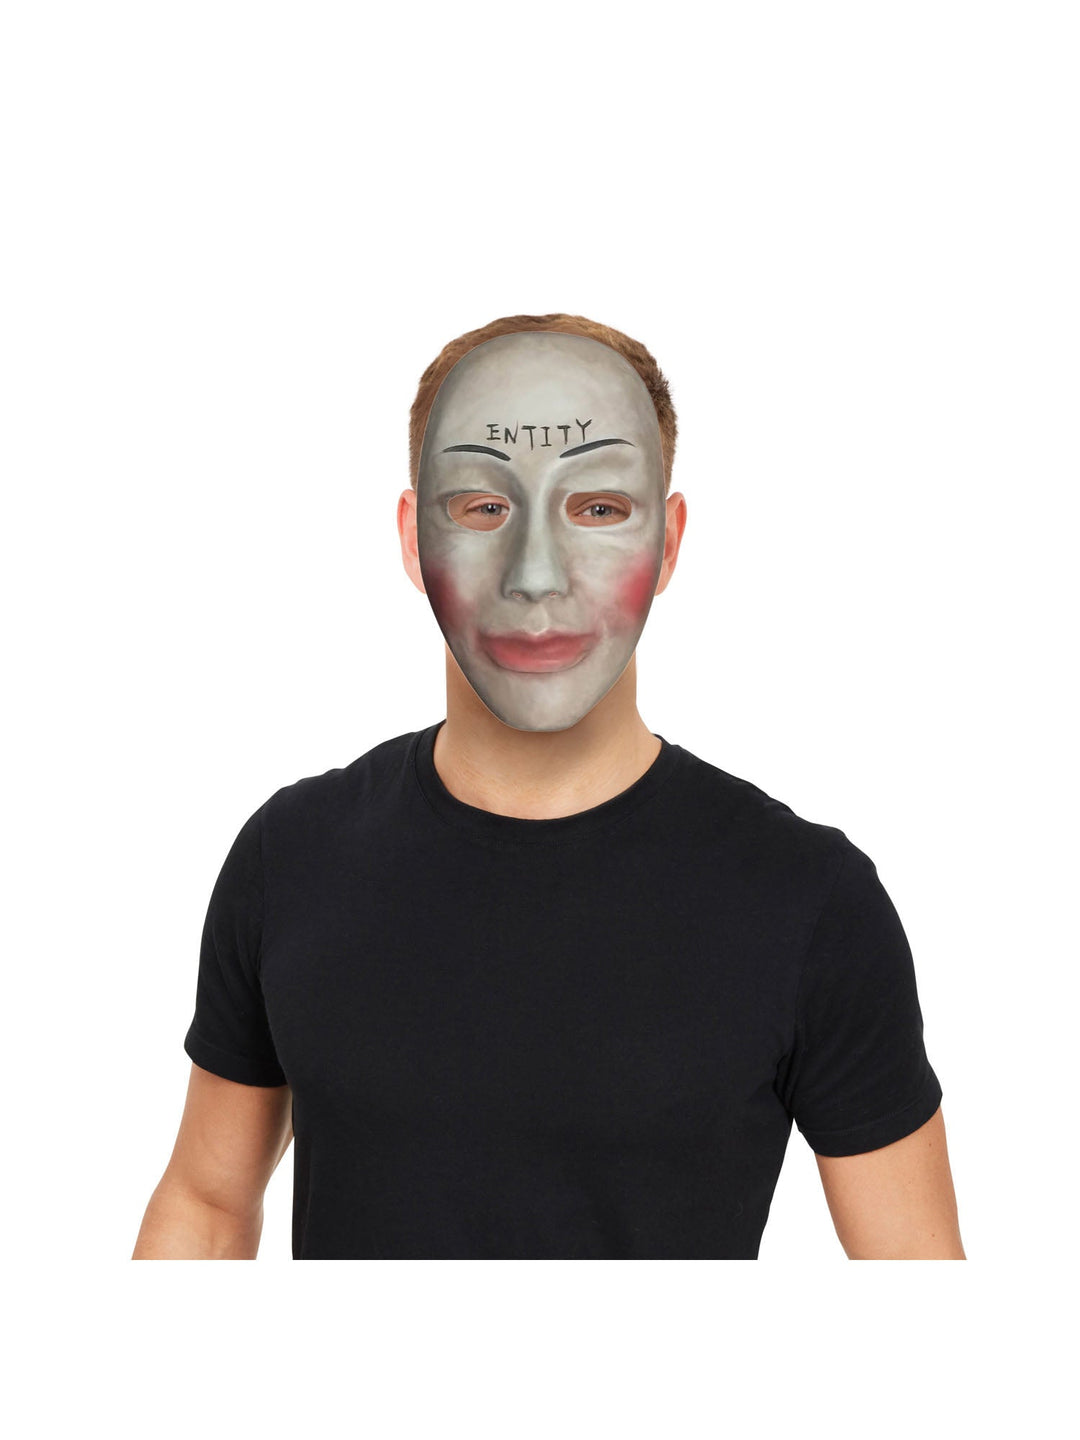 Entity Mask Halloween Scary